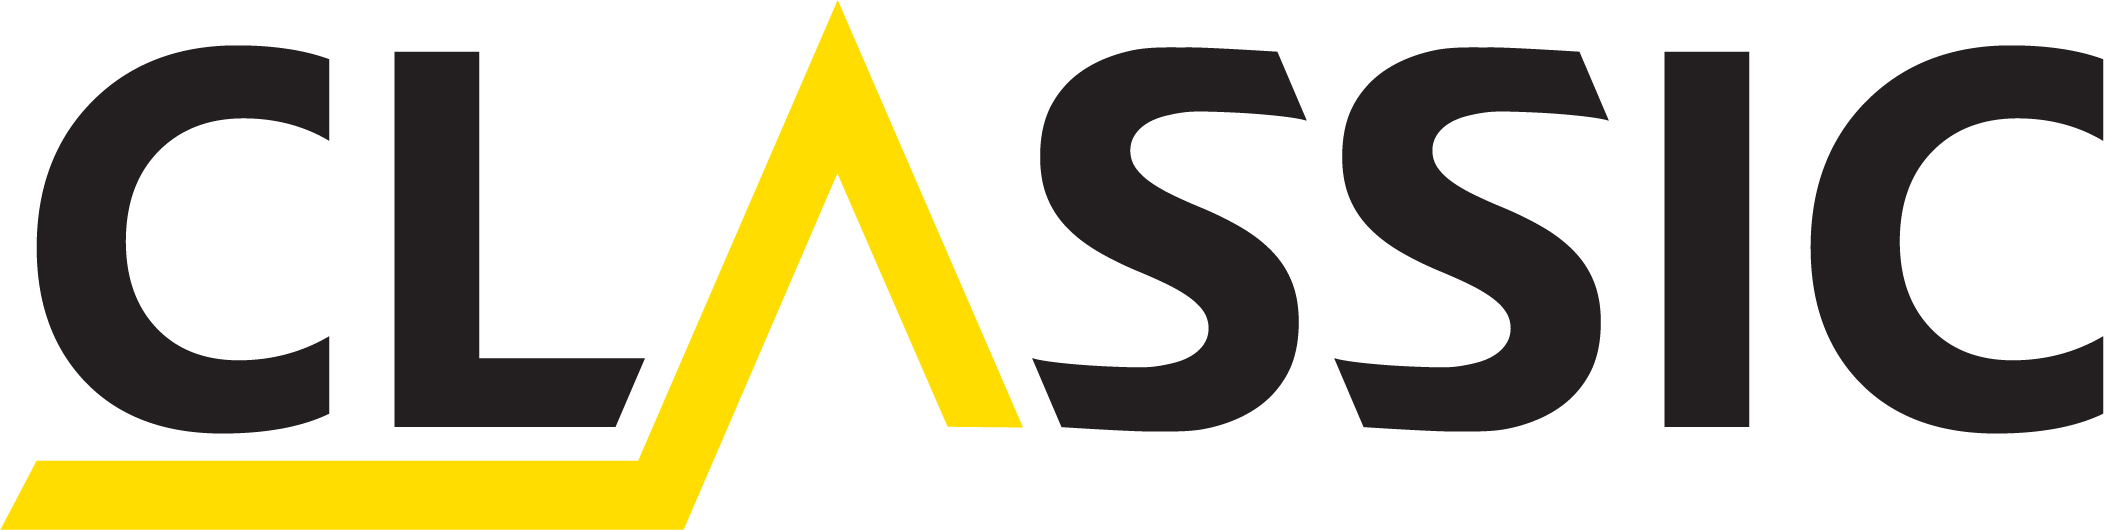 classic logo schwarz gelb